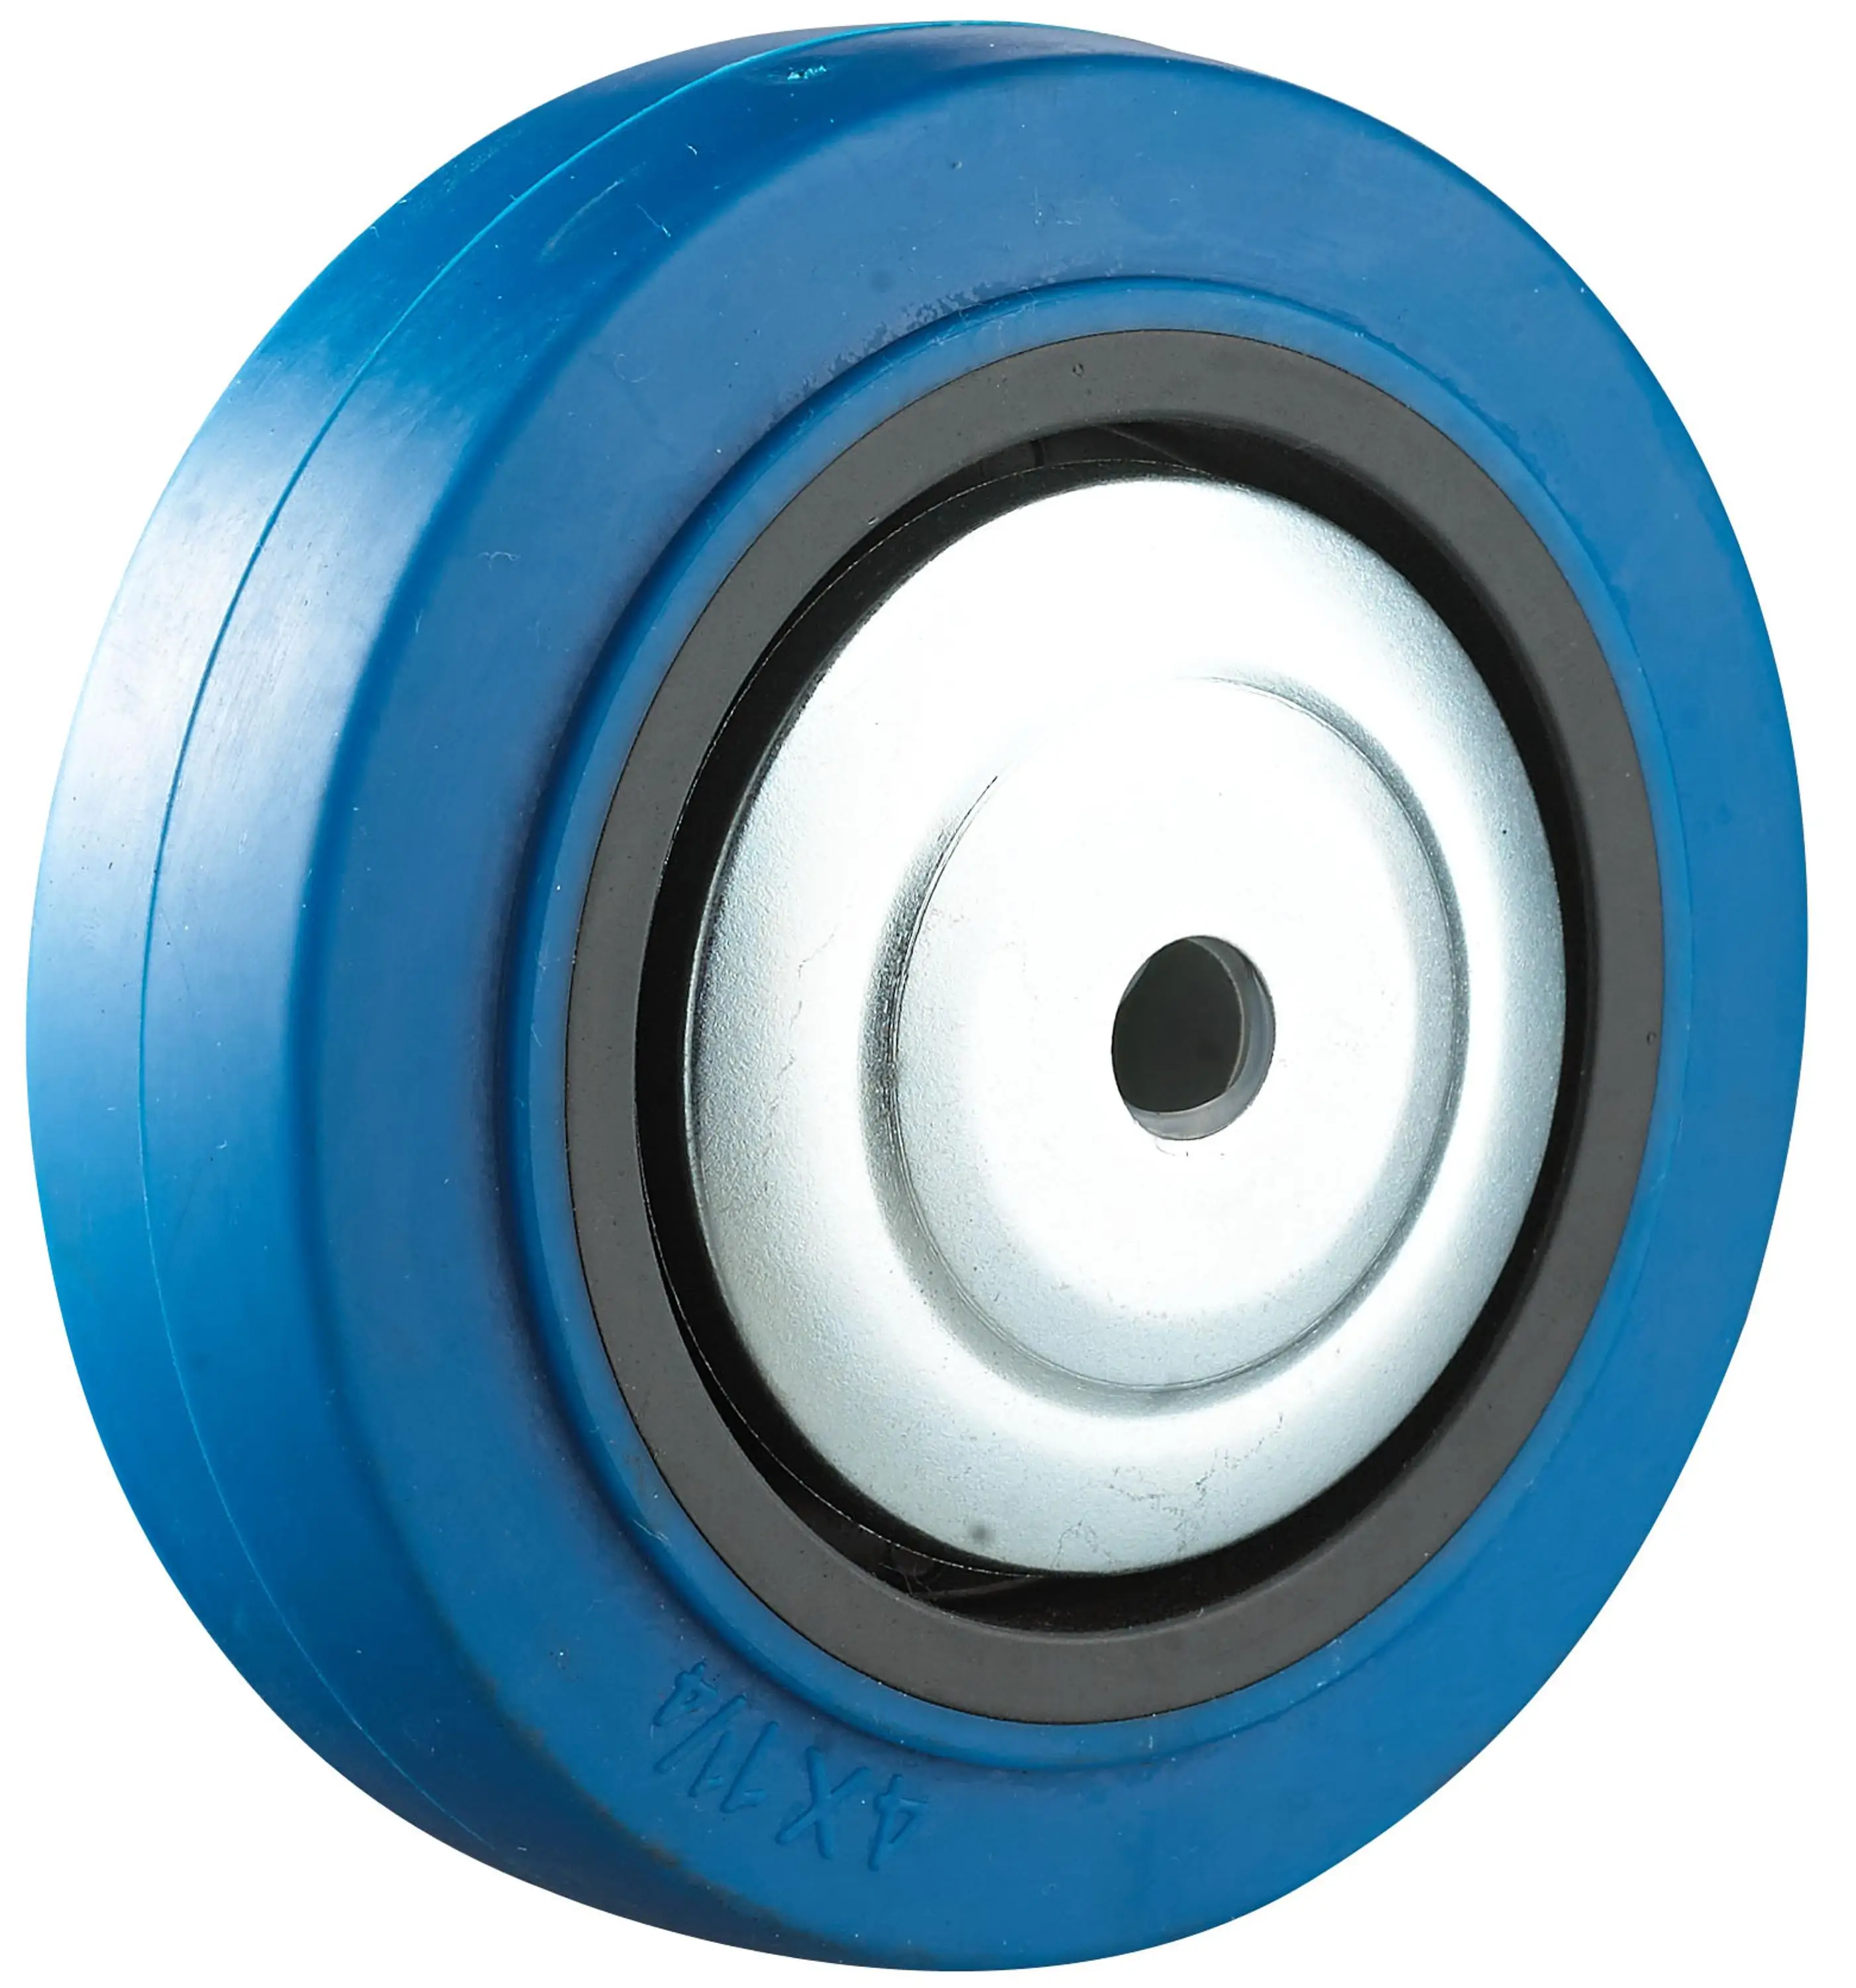 Blue Elastic Rubber Heavy Duty Double Ball bearing Caster Wheels